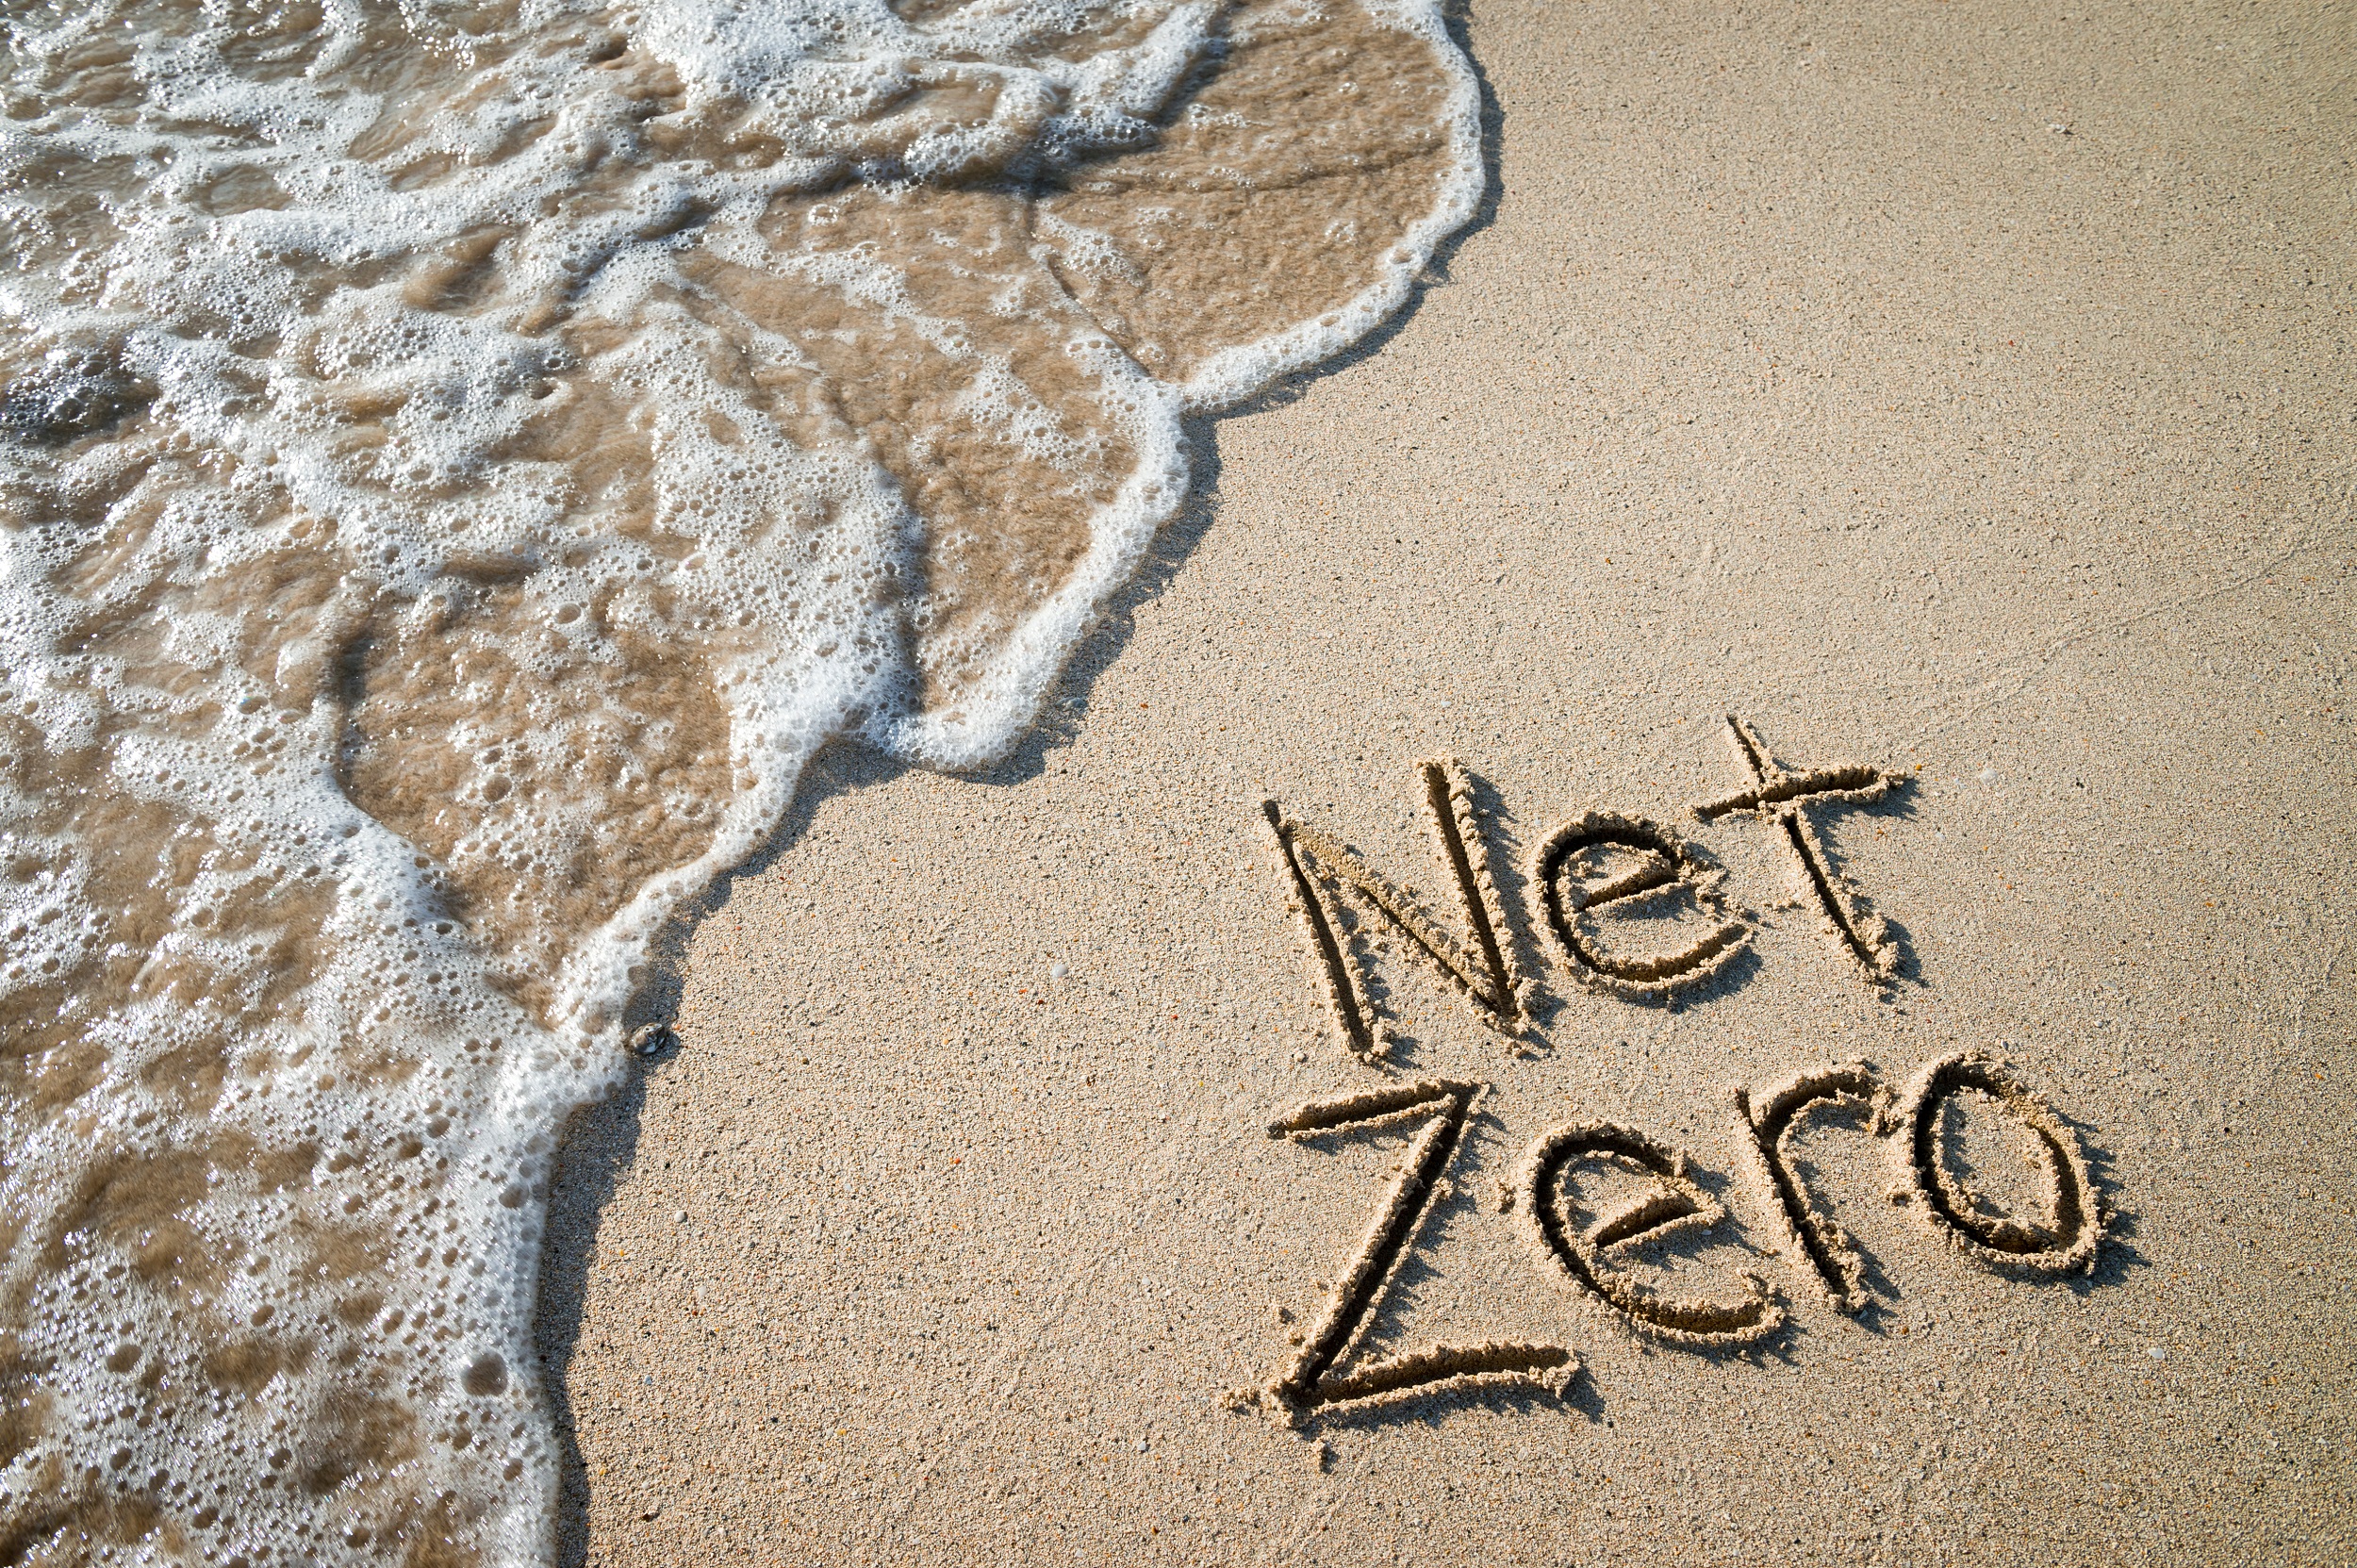 The words 'net zero' written in the sand of a beach.